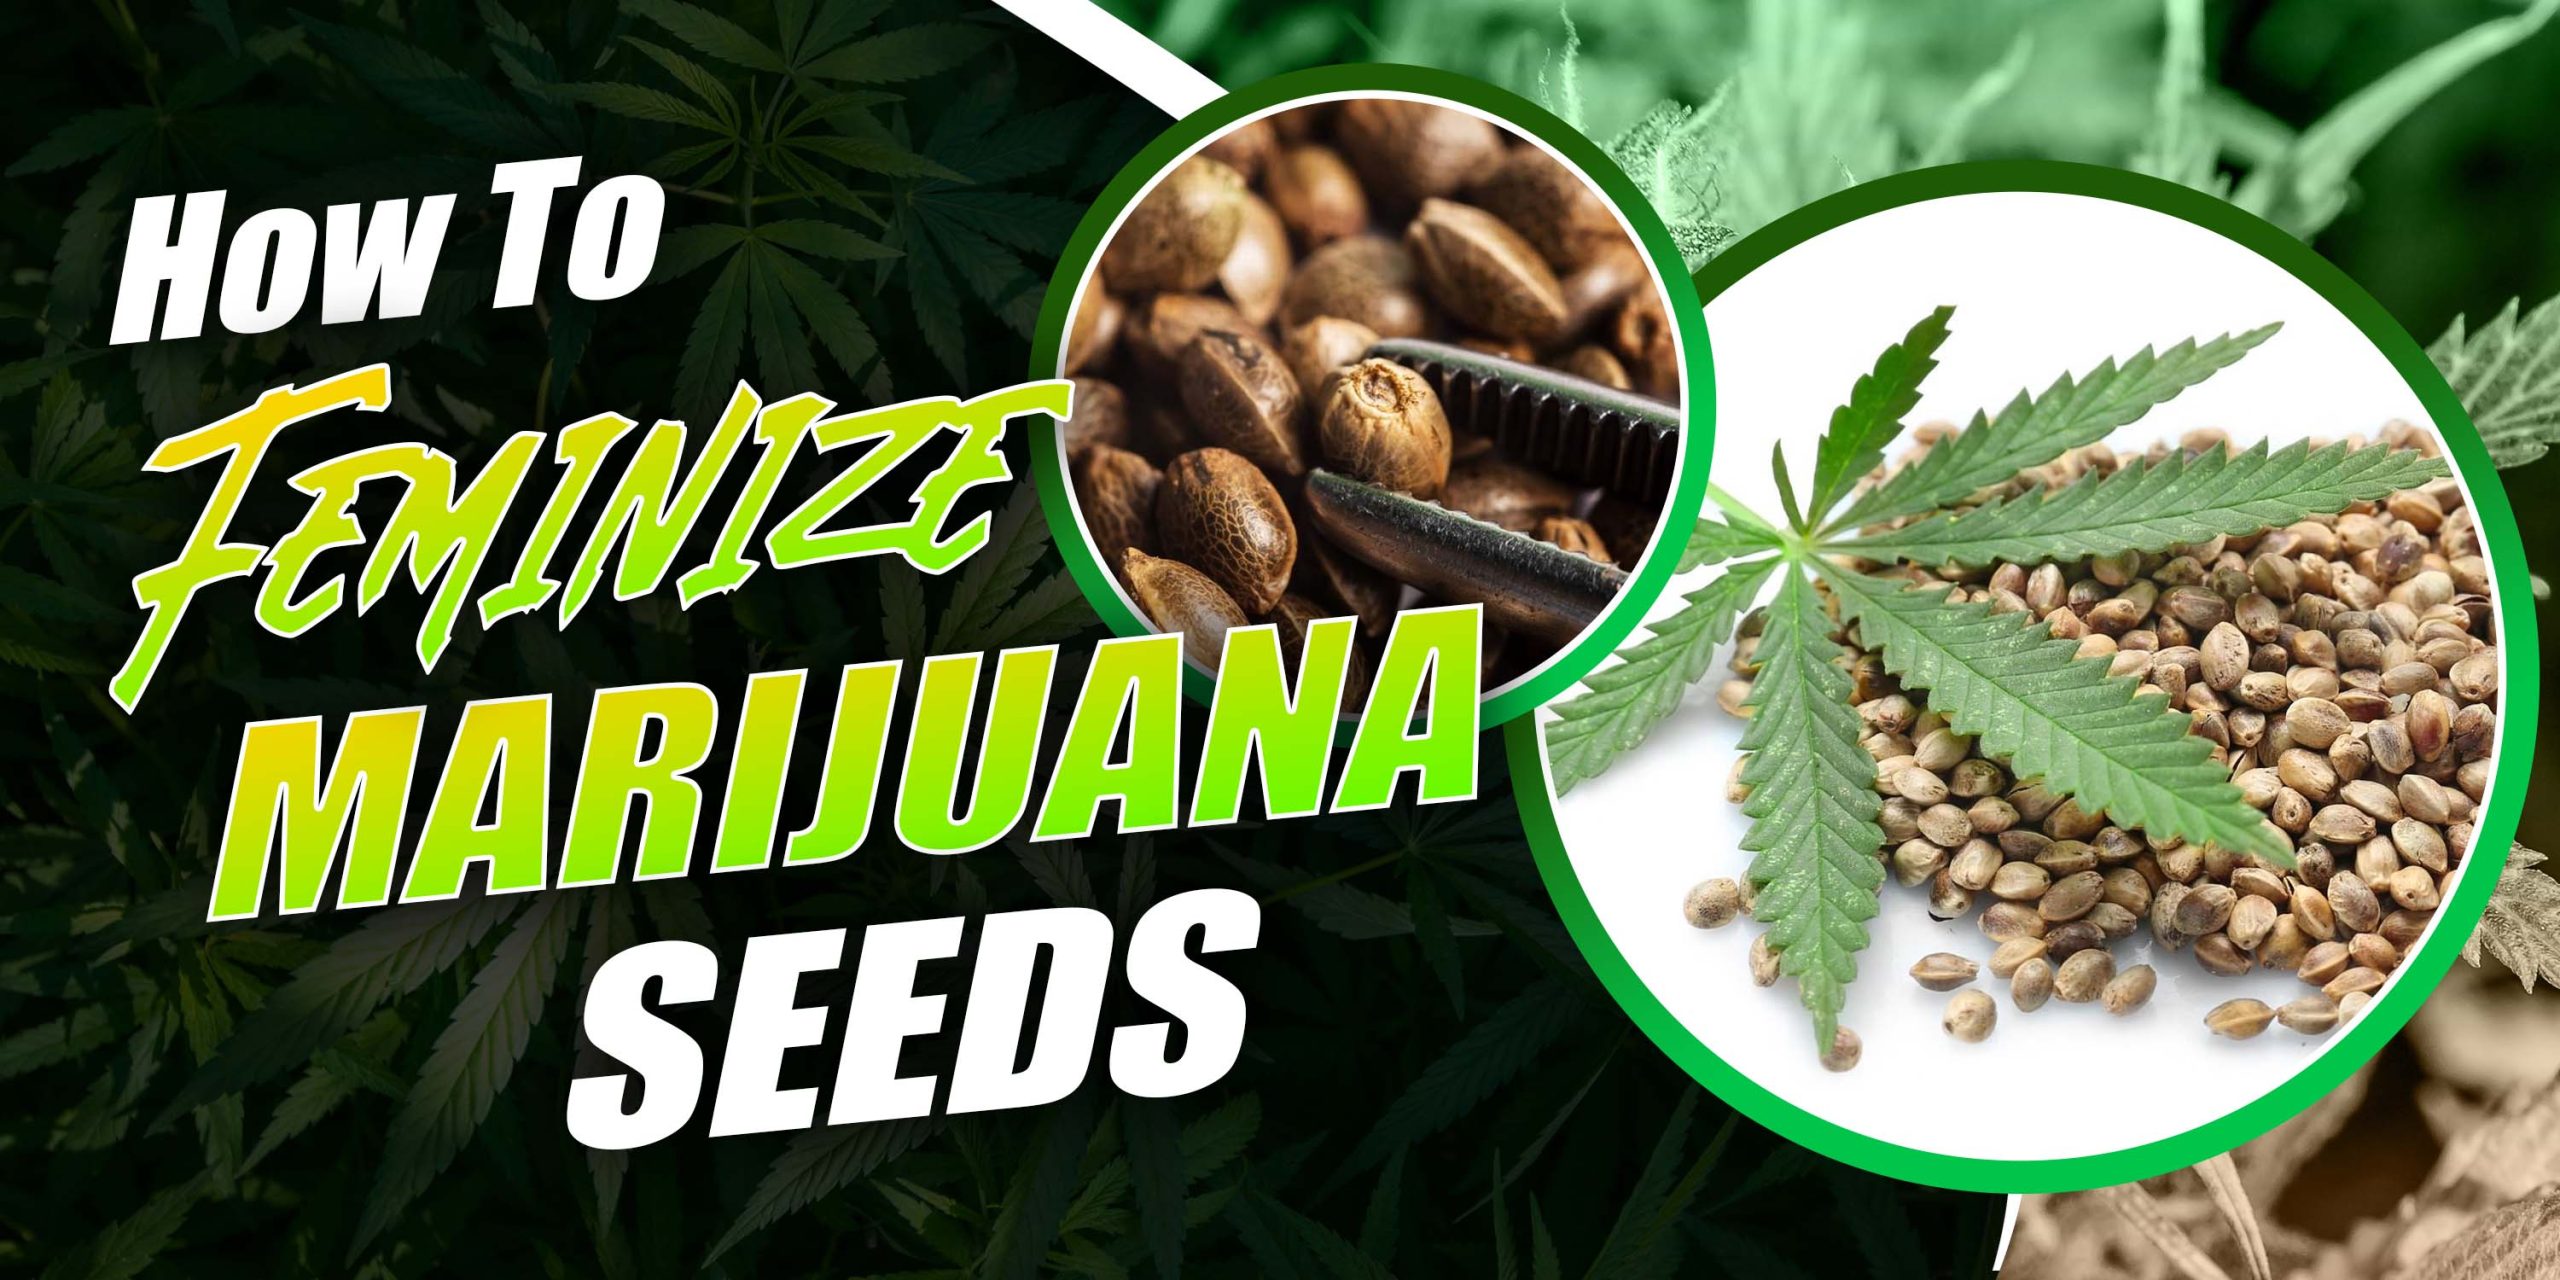 How To Feminize Marijuana Seeds